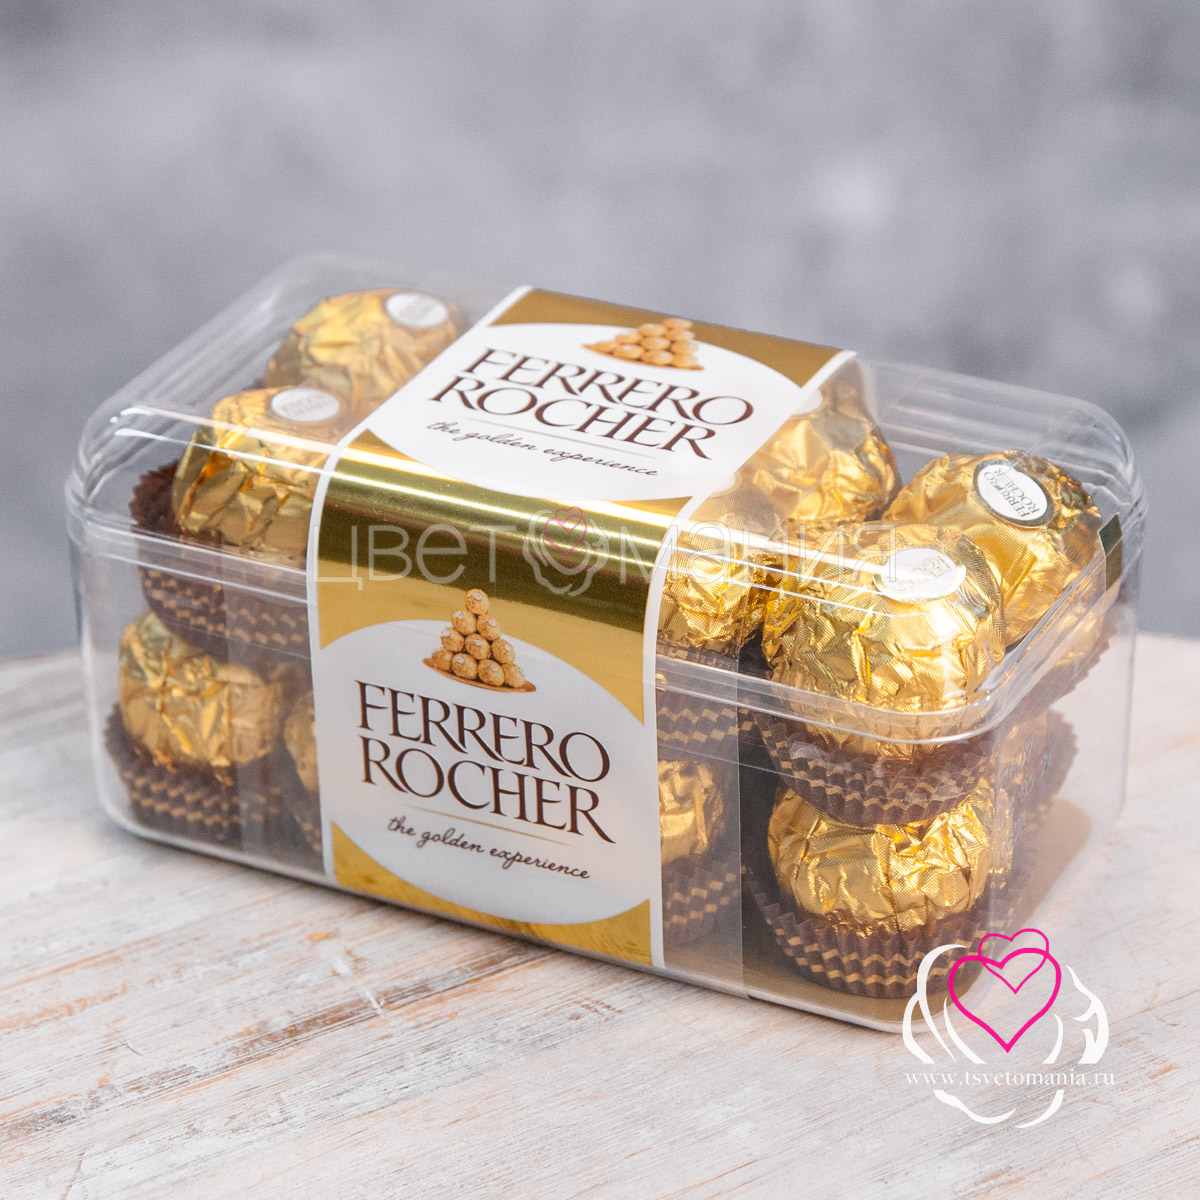 Ferrero rocher конфеты 200 г конфеты ferrero rocher хрустящие из молочного шоколада 212 5 г